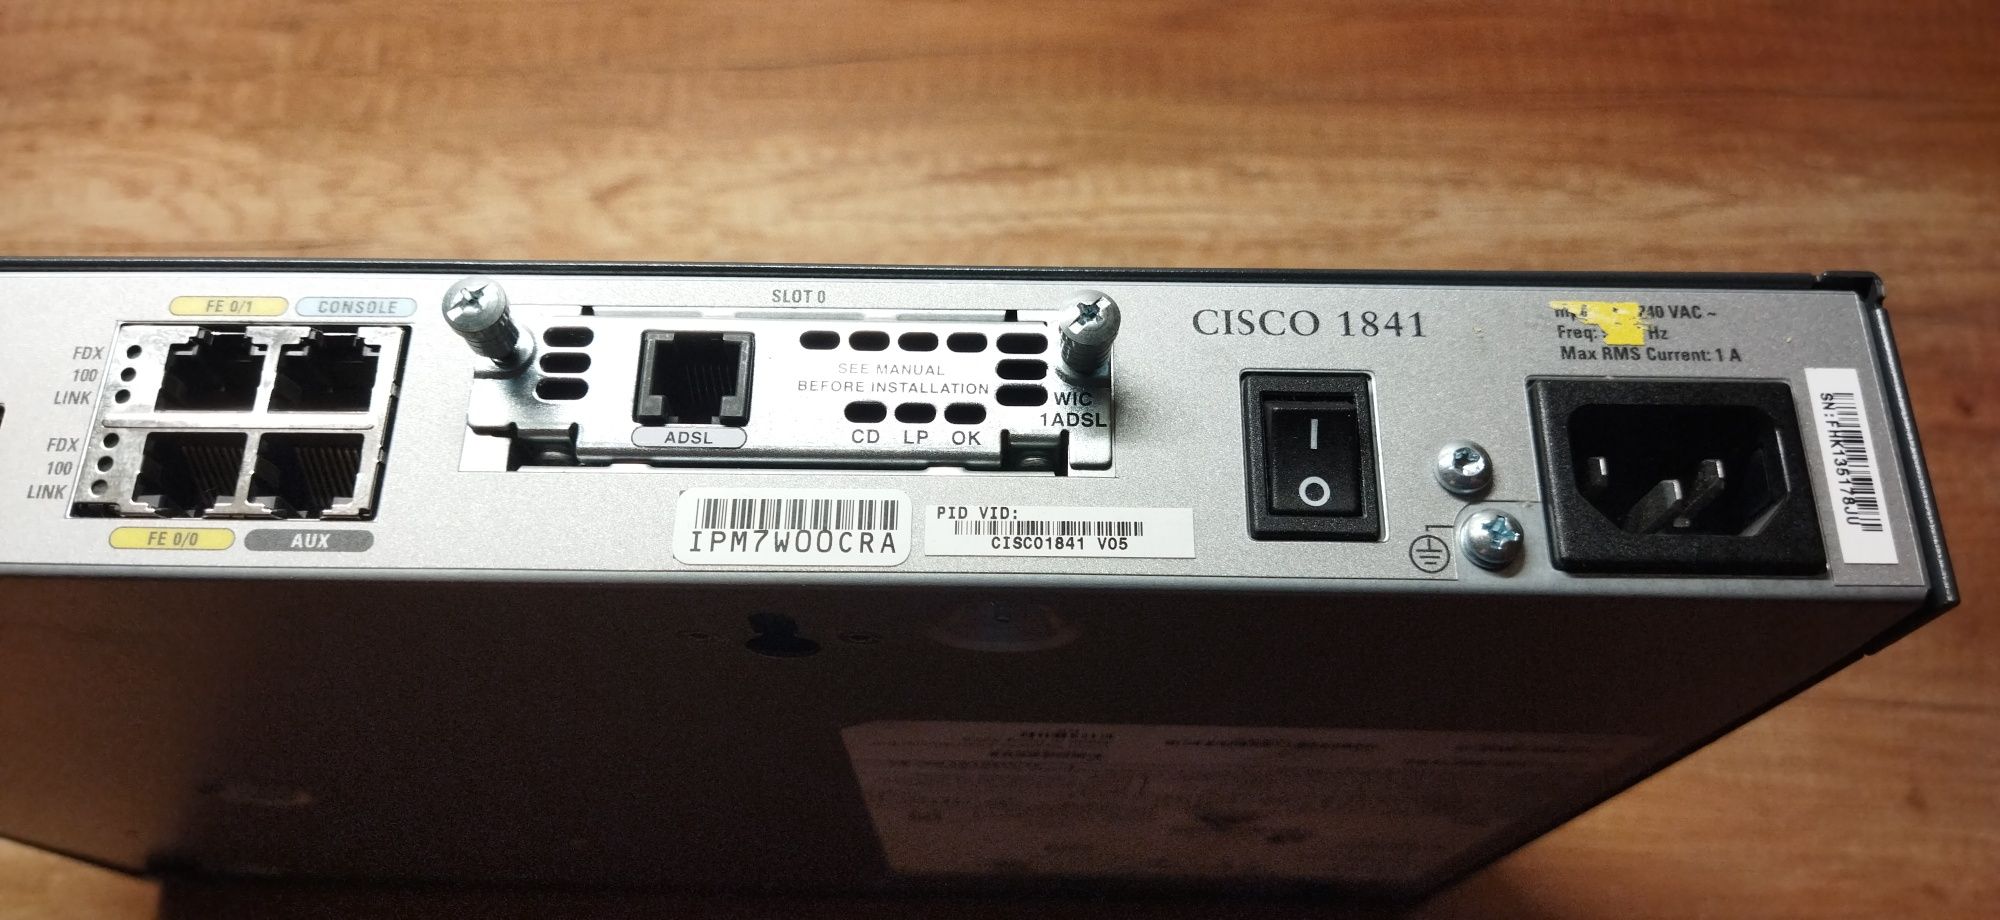 Router Cisco 1841 V05  IPM7W00CRA +WIC 1ADSL